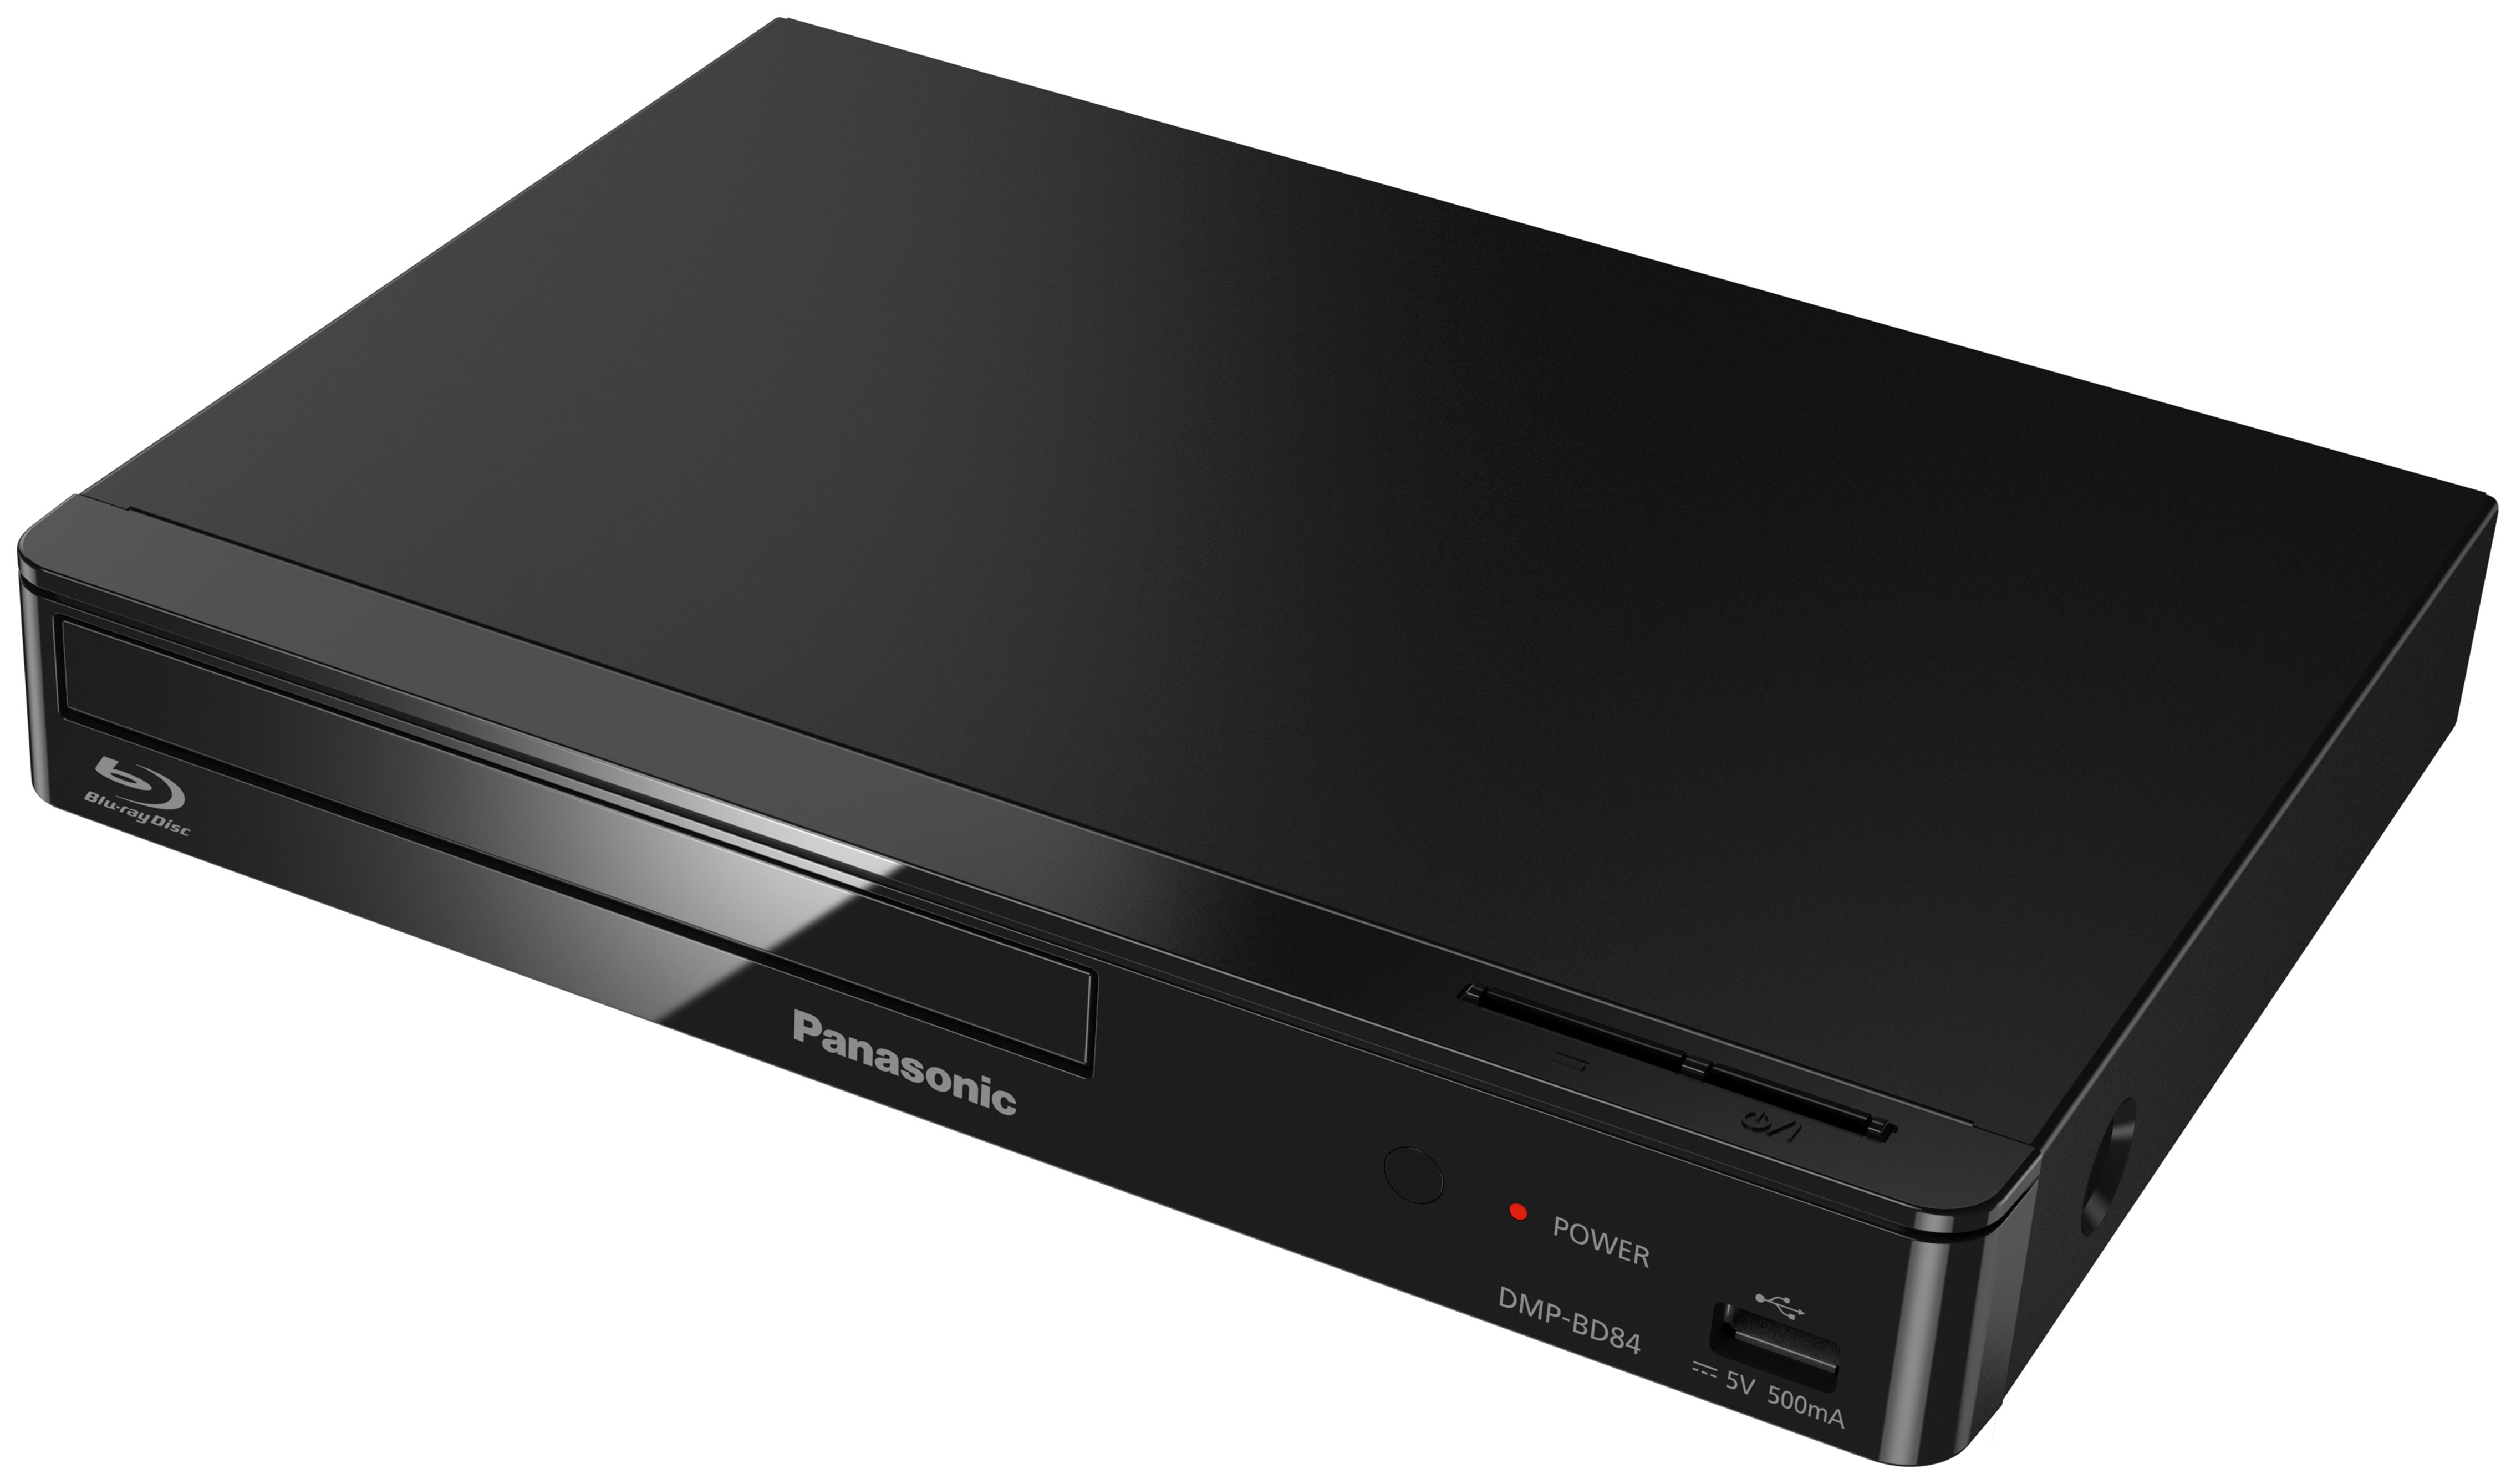 Panasonic DMP BD84EB K Smart Blu-ray Player Review